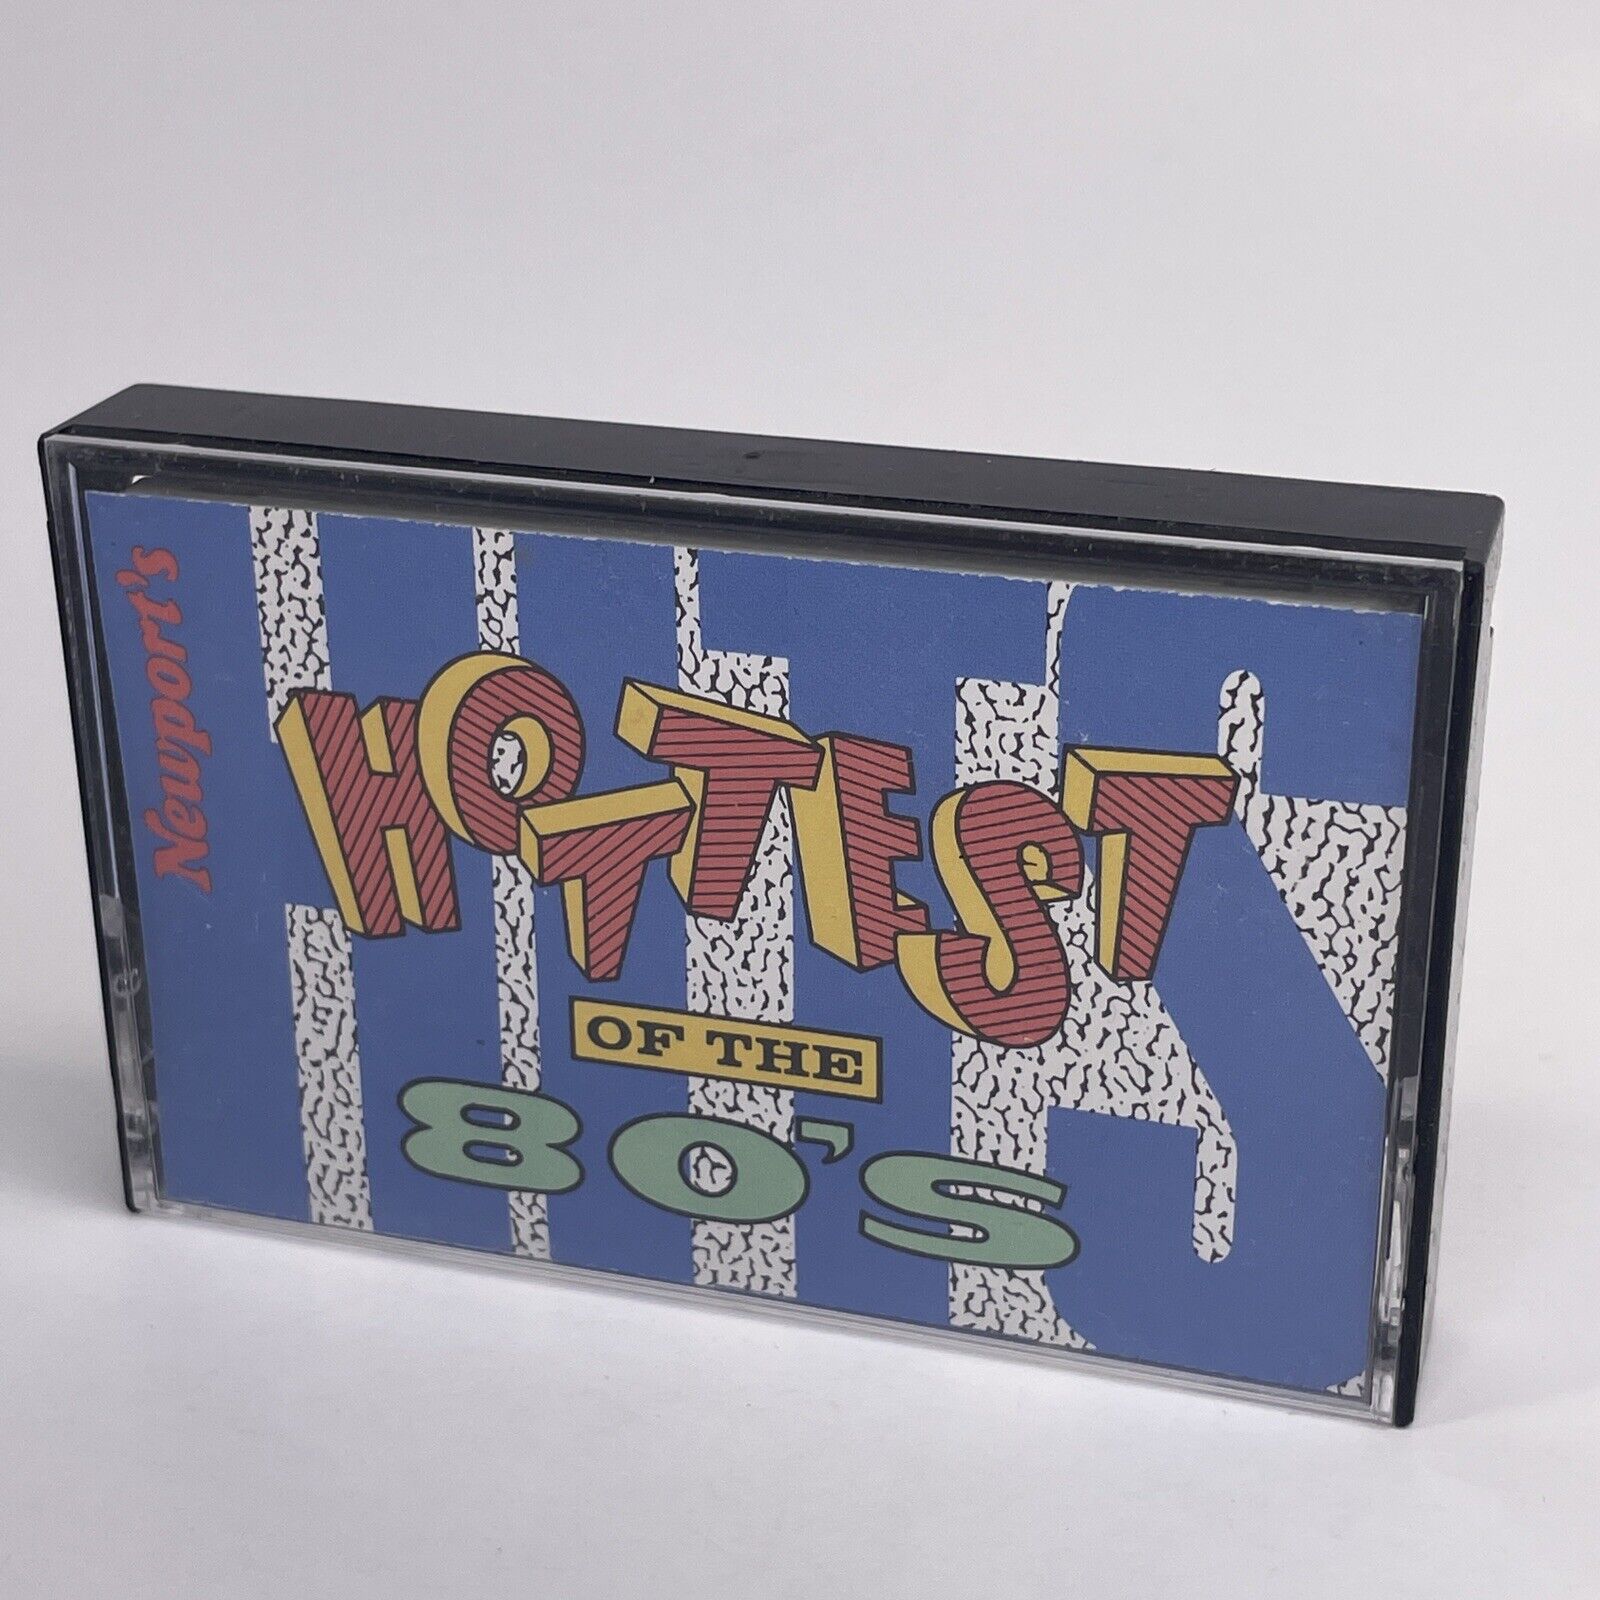 Newport Tobacco Cigarettes Presents: Hottest Of The 80’s (Cassette Tape, 1989)